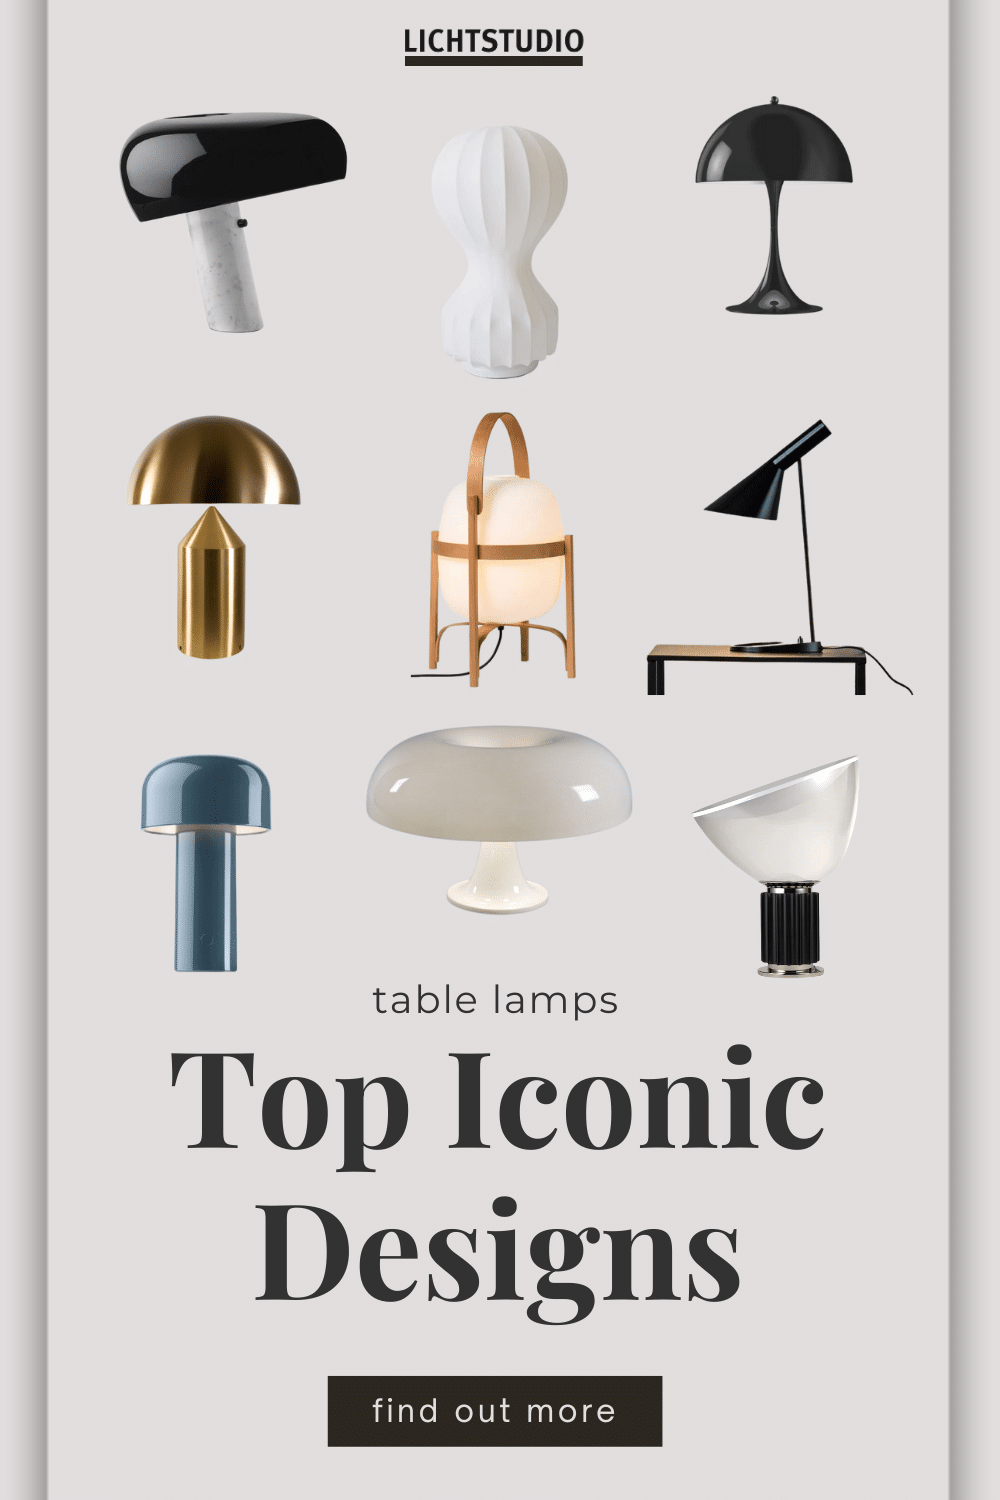 Top Iconic Designs - Tischleuchten von Flos, artemide, Louis Poulsen, Santa & cole, Oluce